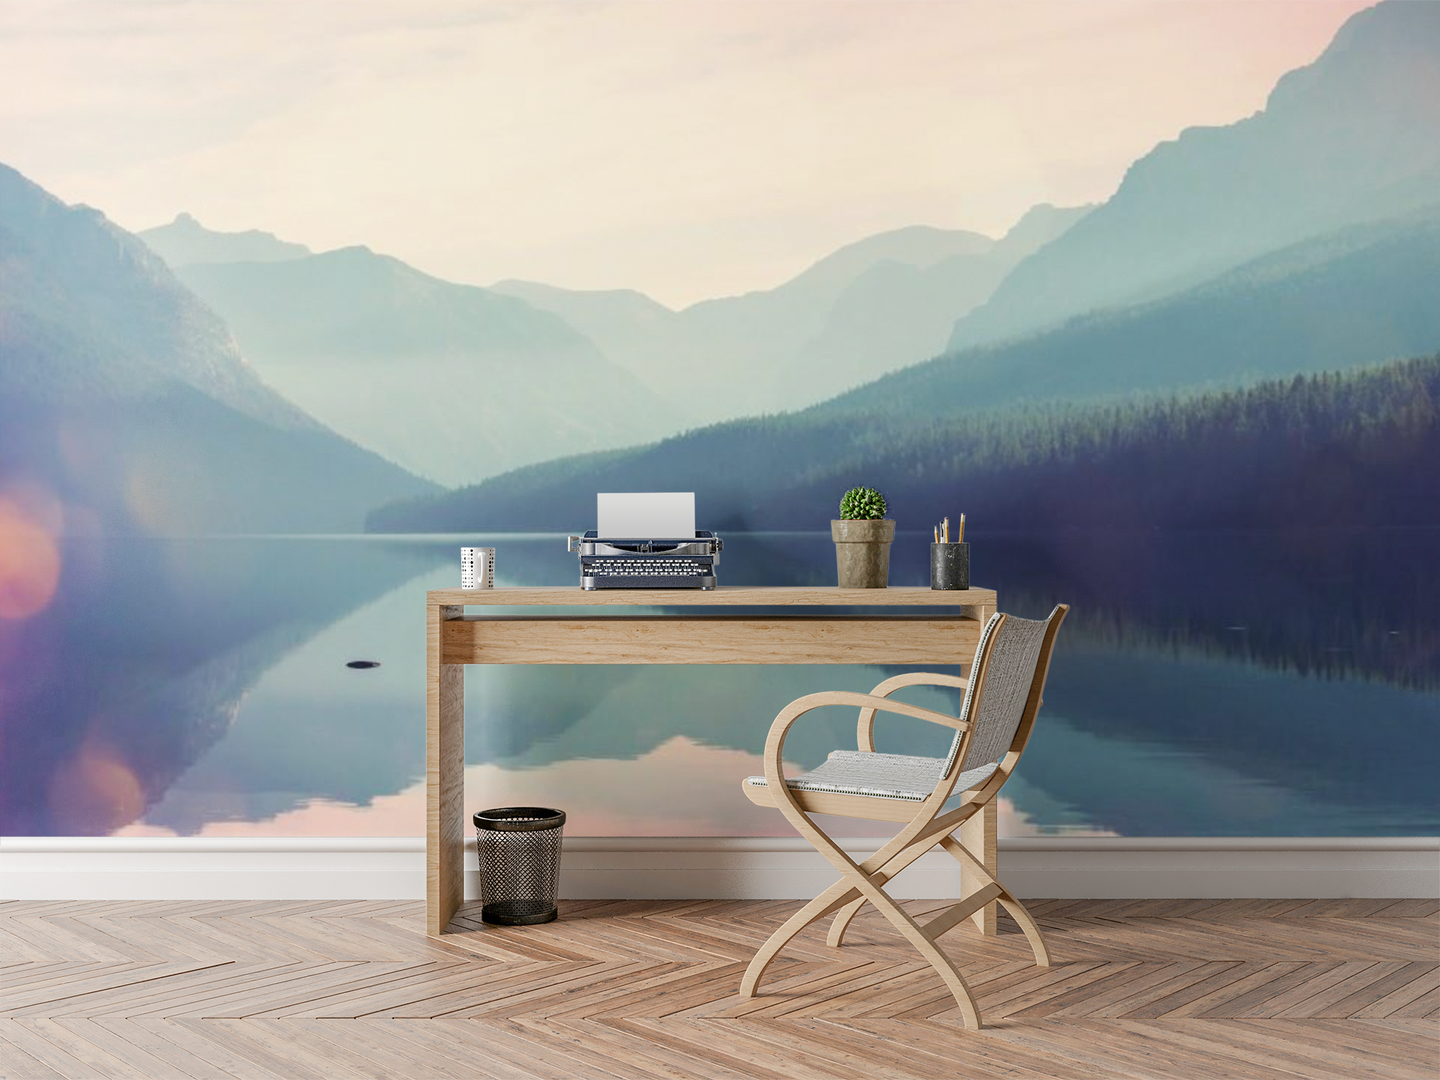 Foggy Lake and Mountains - 02108 - Wall Murals Printing - wall art